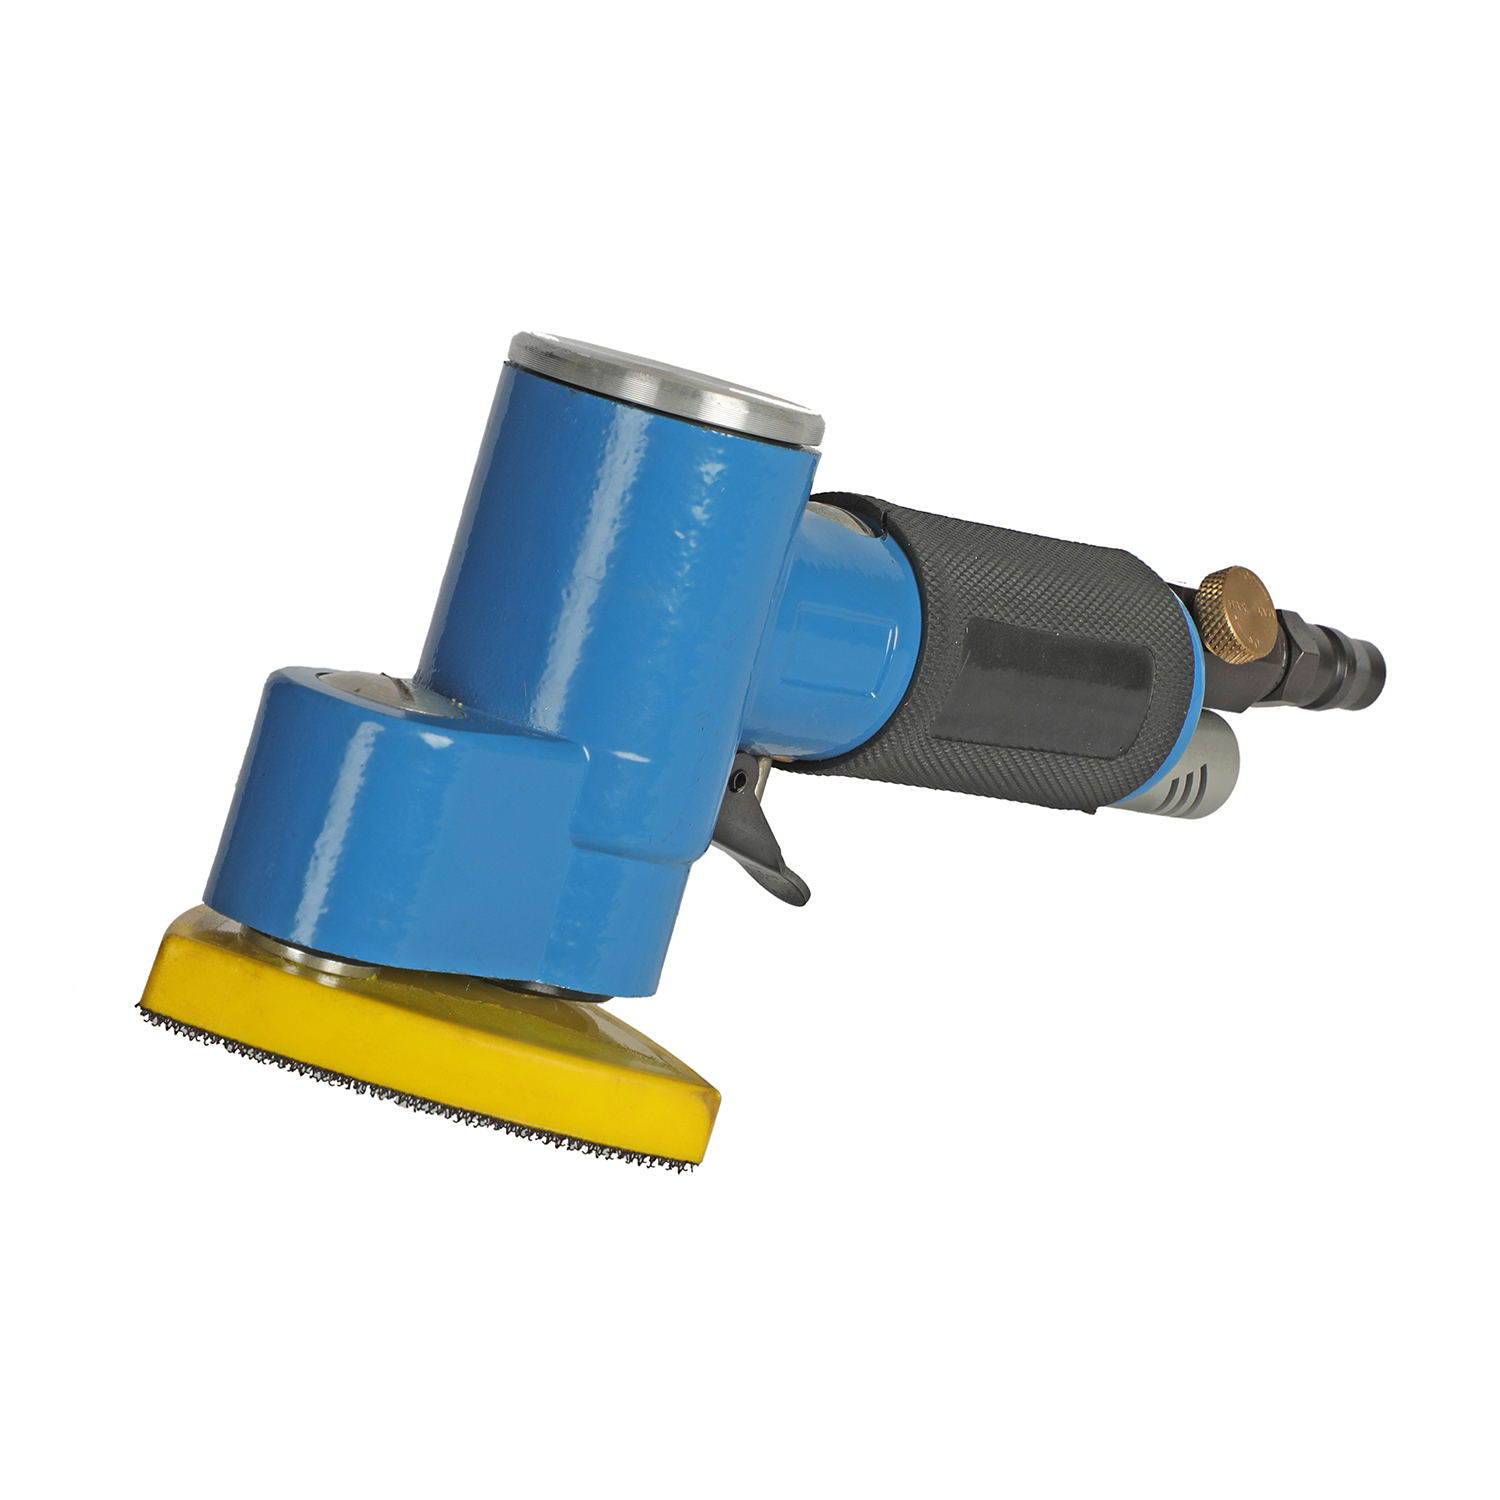 Working principle of pneumatic air grinder